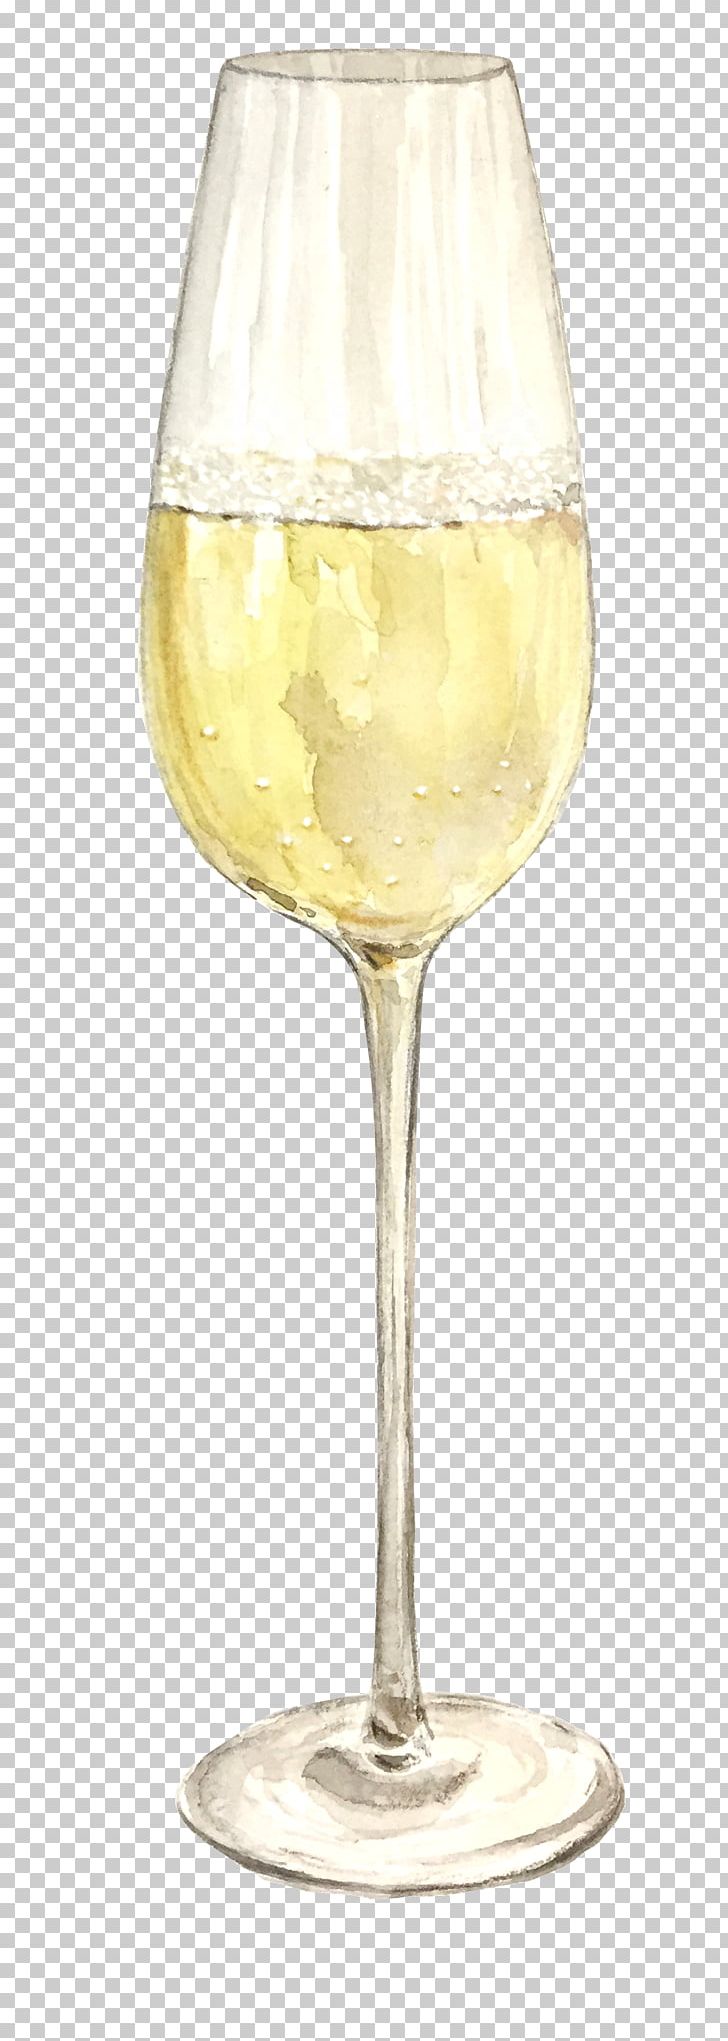 Wine Glass White Wine Champagne Cocktail Spritzer Champagne Glass PNG, Clipart, Beer Glass, Beer Glasses, Champagne Cocktail, Champagne Glass, Champagne Stemware Free PNG Download